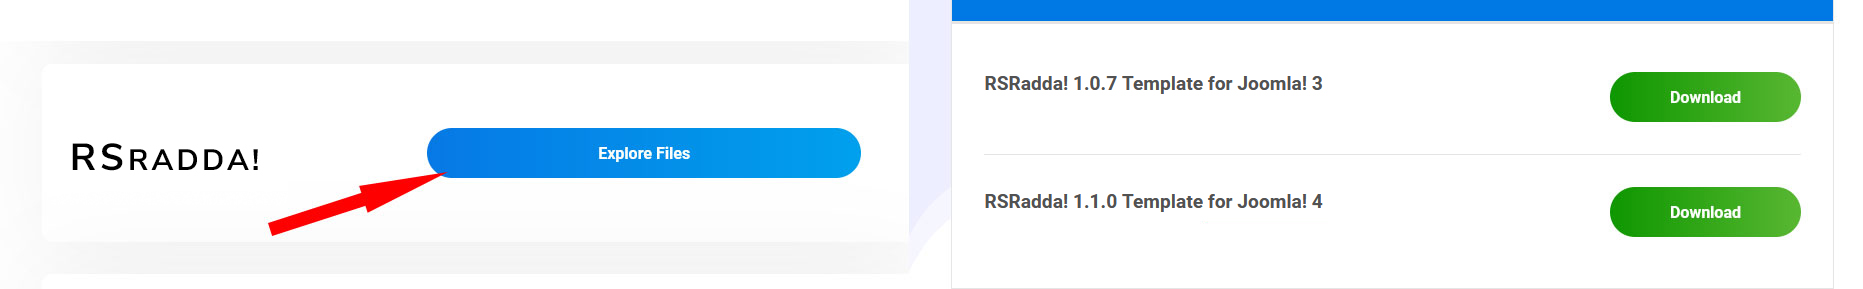 RSRadda! for Joomla! 4